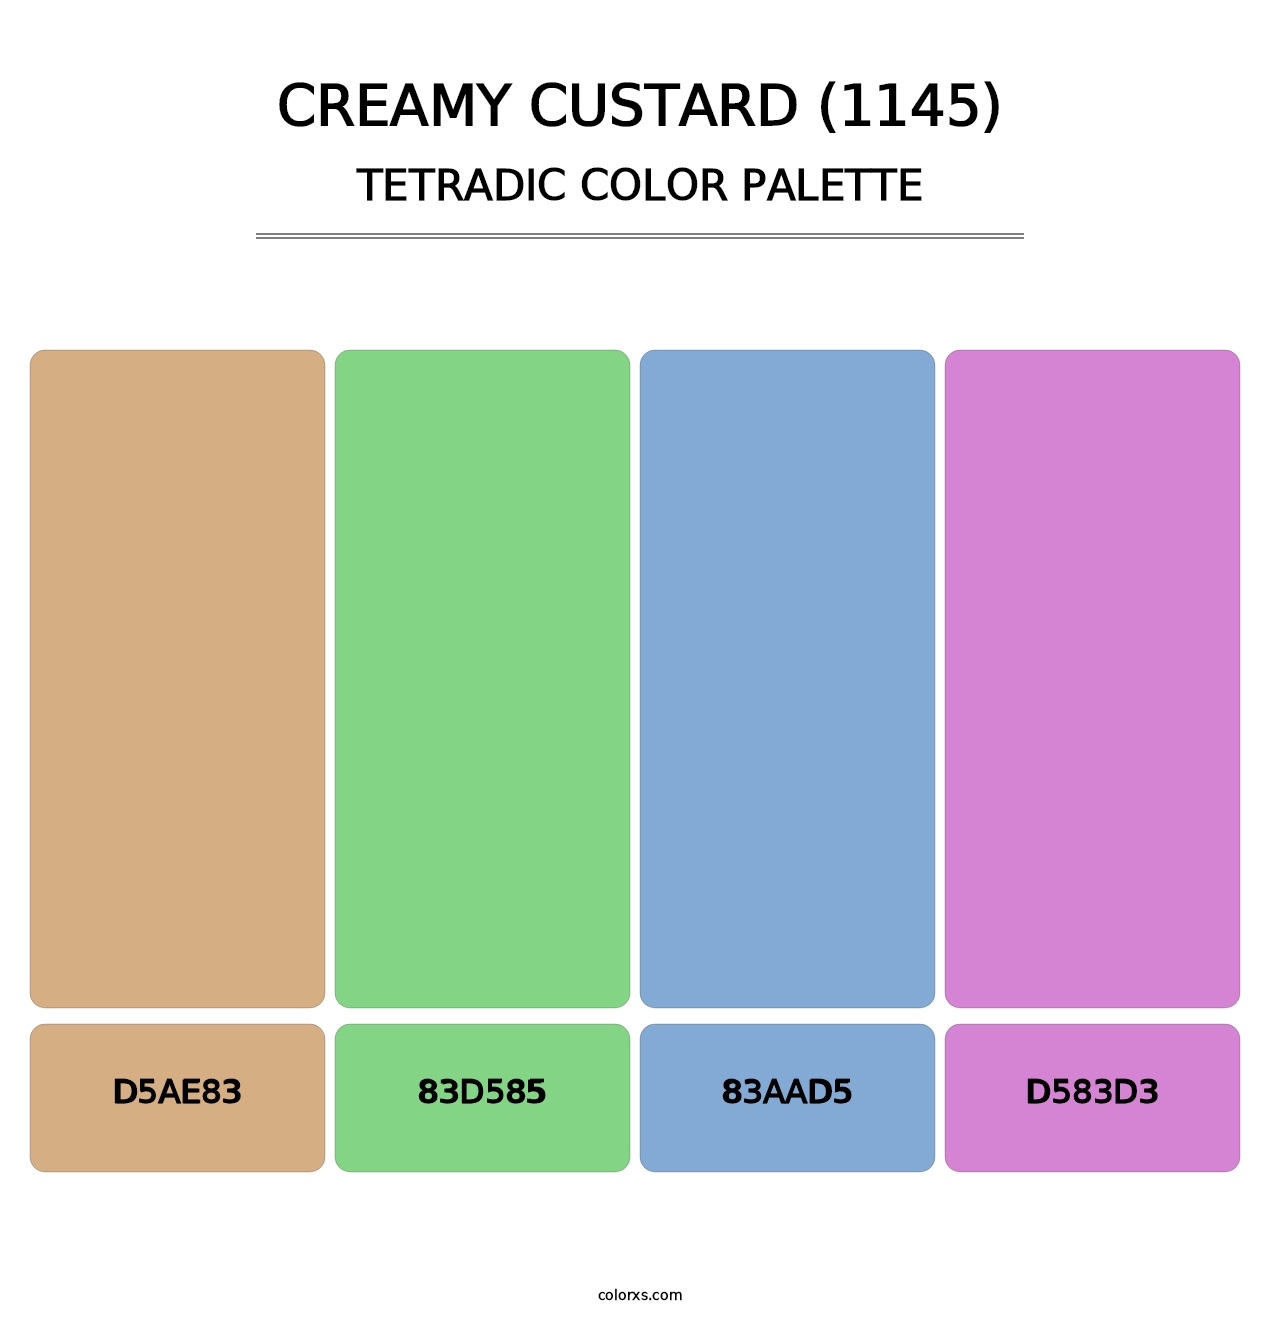 Creamy Custard (1145) - Tetradic Color Palette